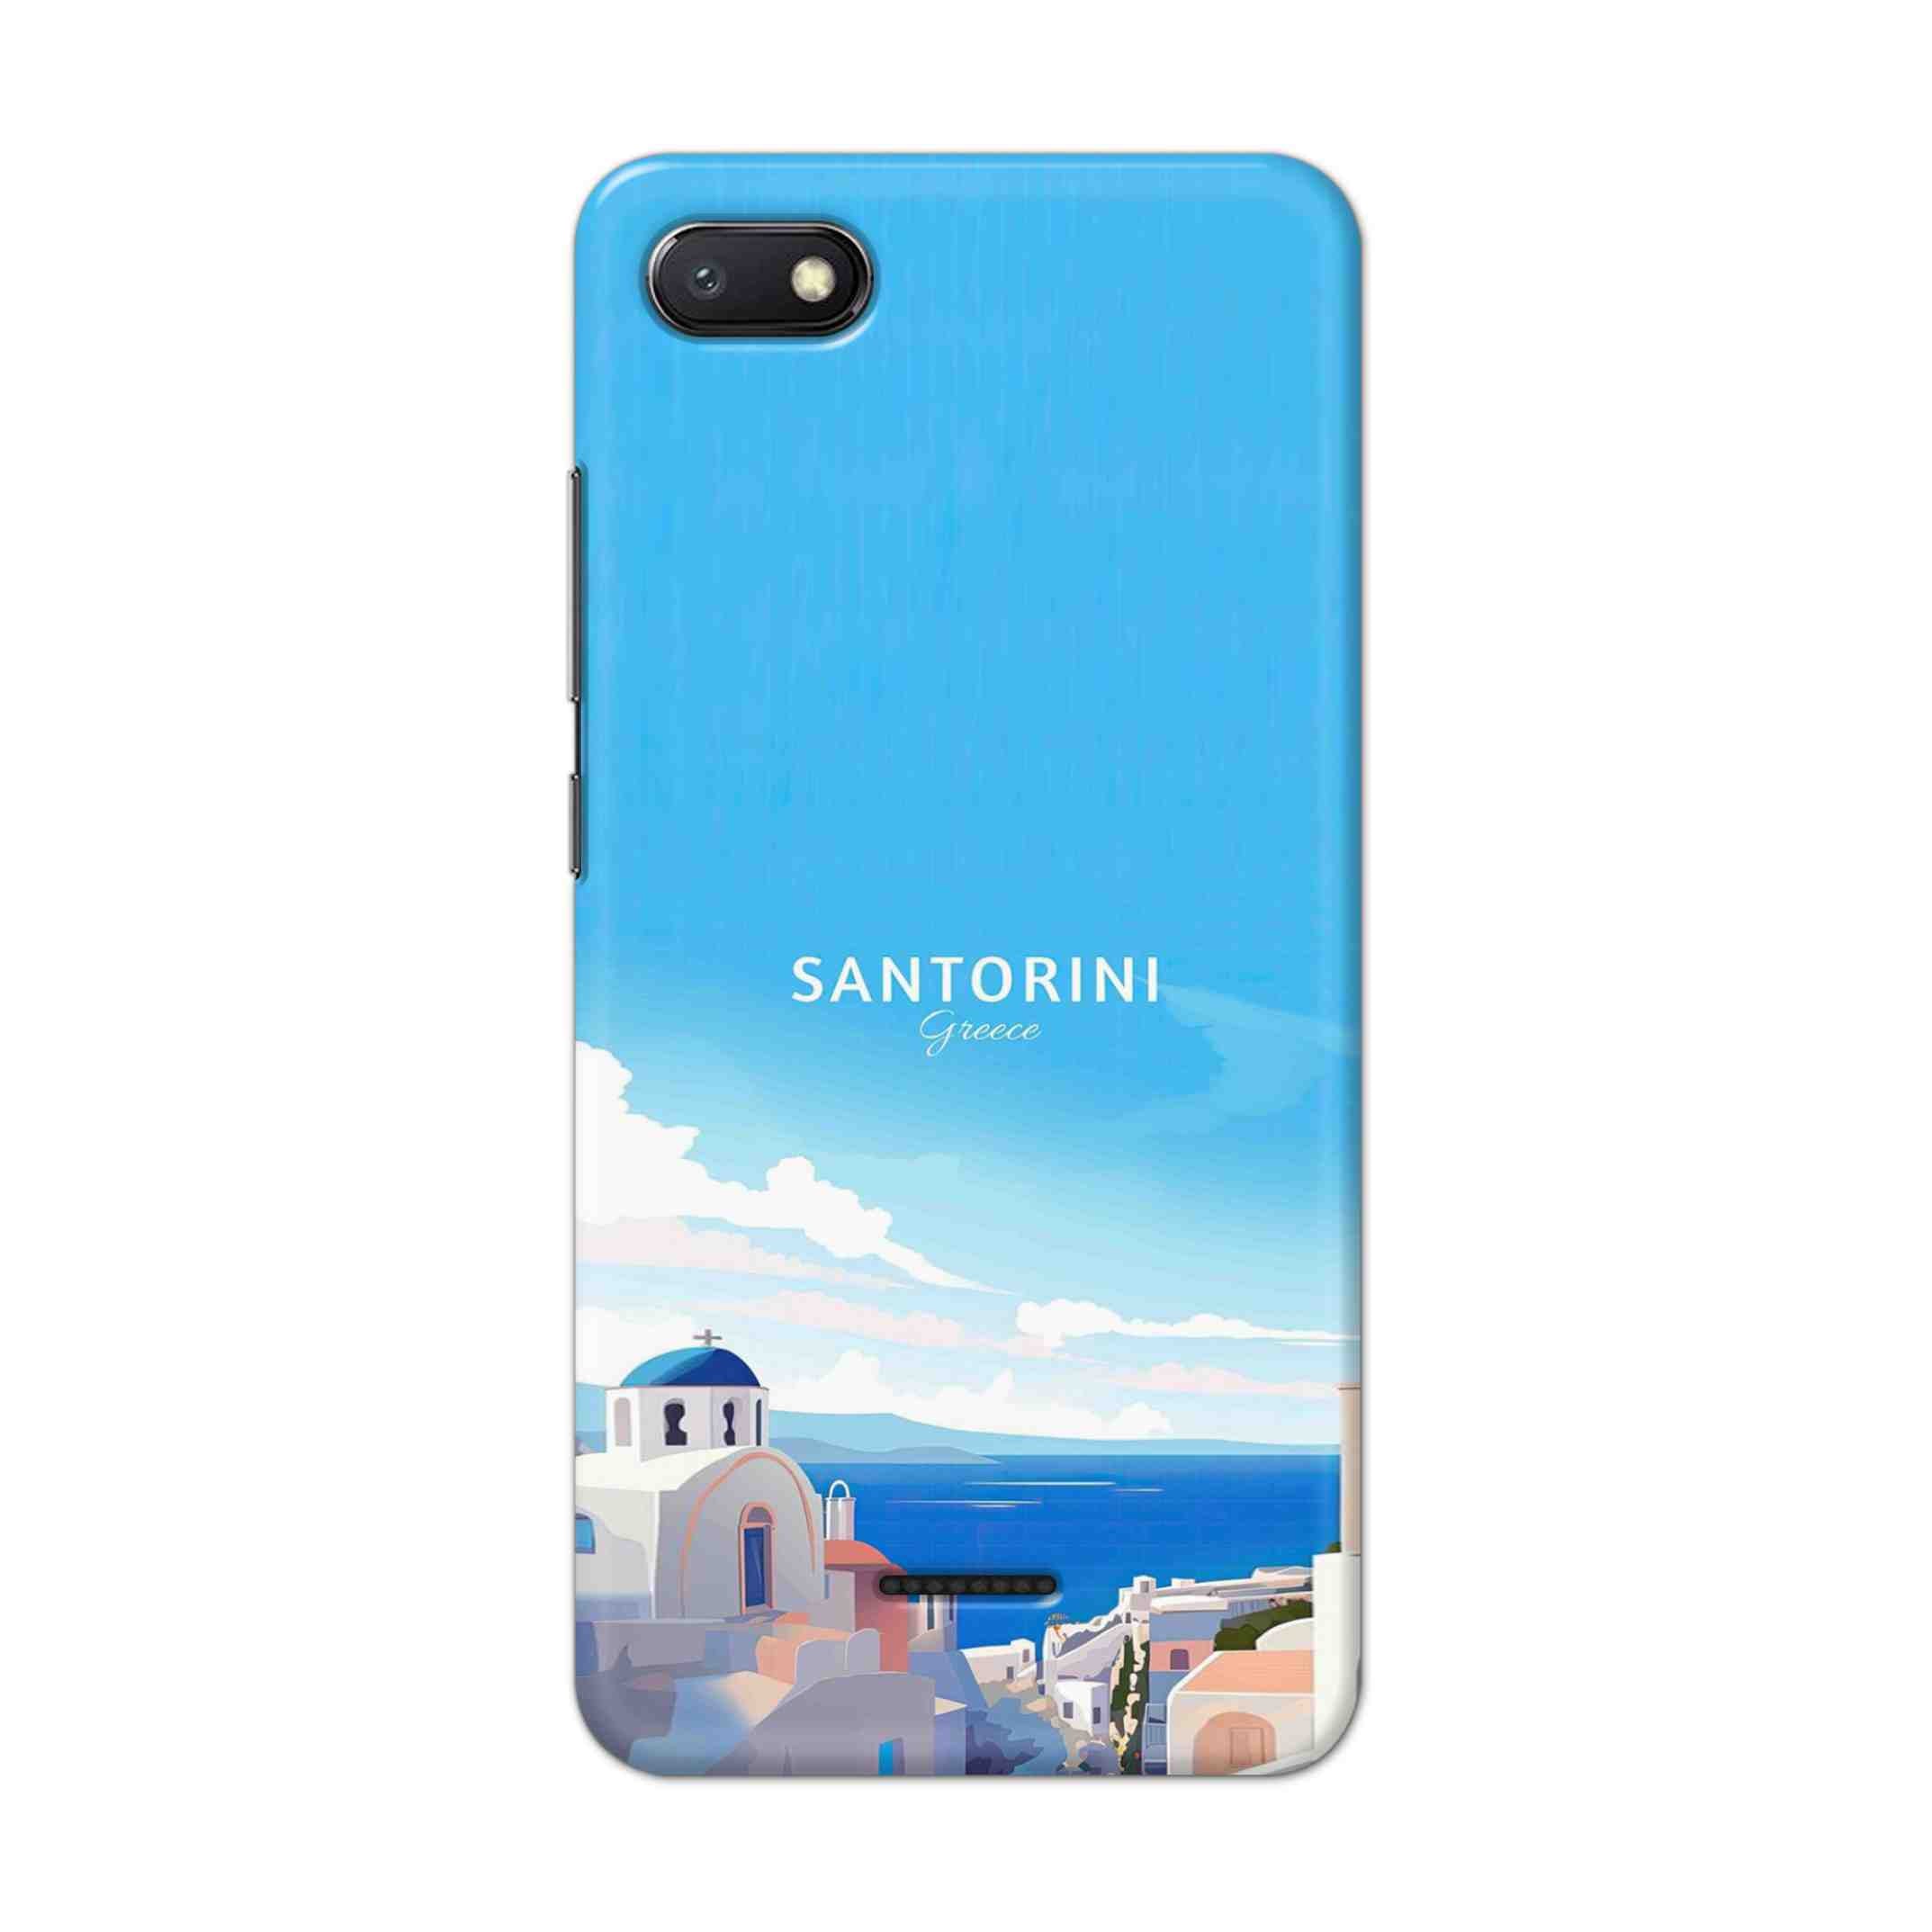 Buy Santorini Hard Back Mobile Phone Case/Cover For Xiaomi Redmi 6A Online